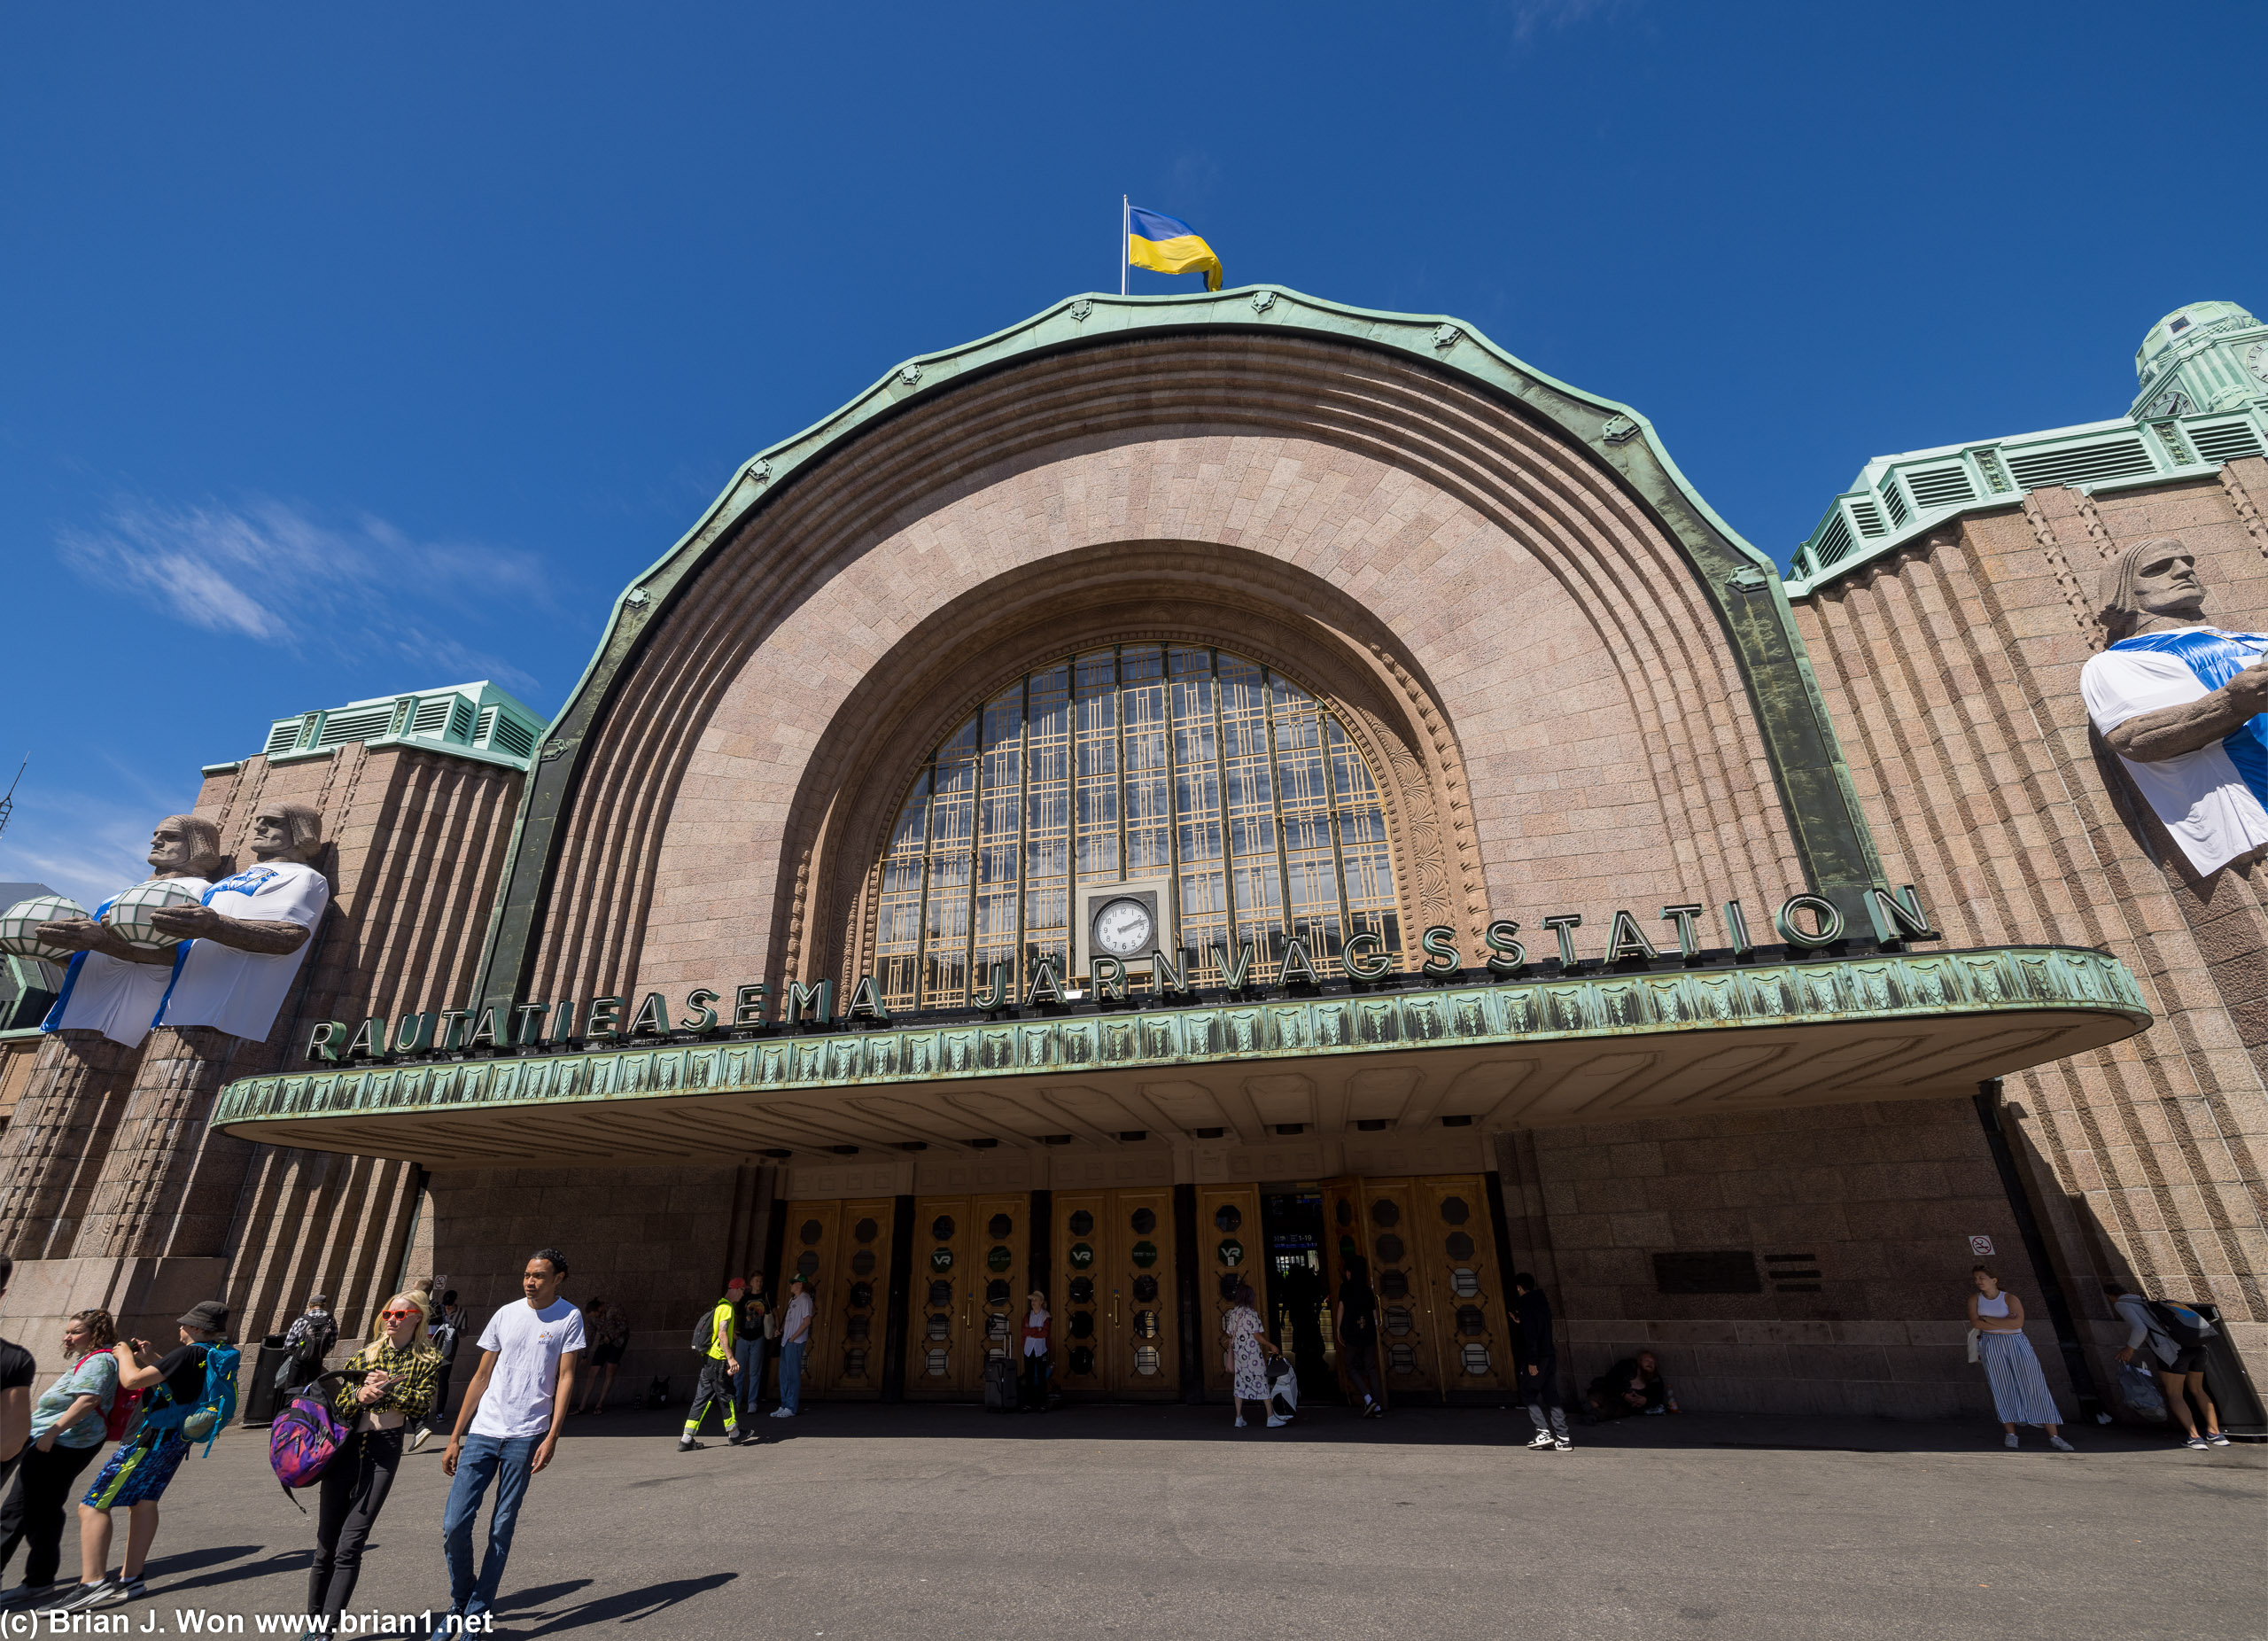 Central train station in Helsinki.